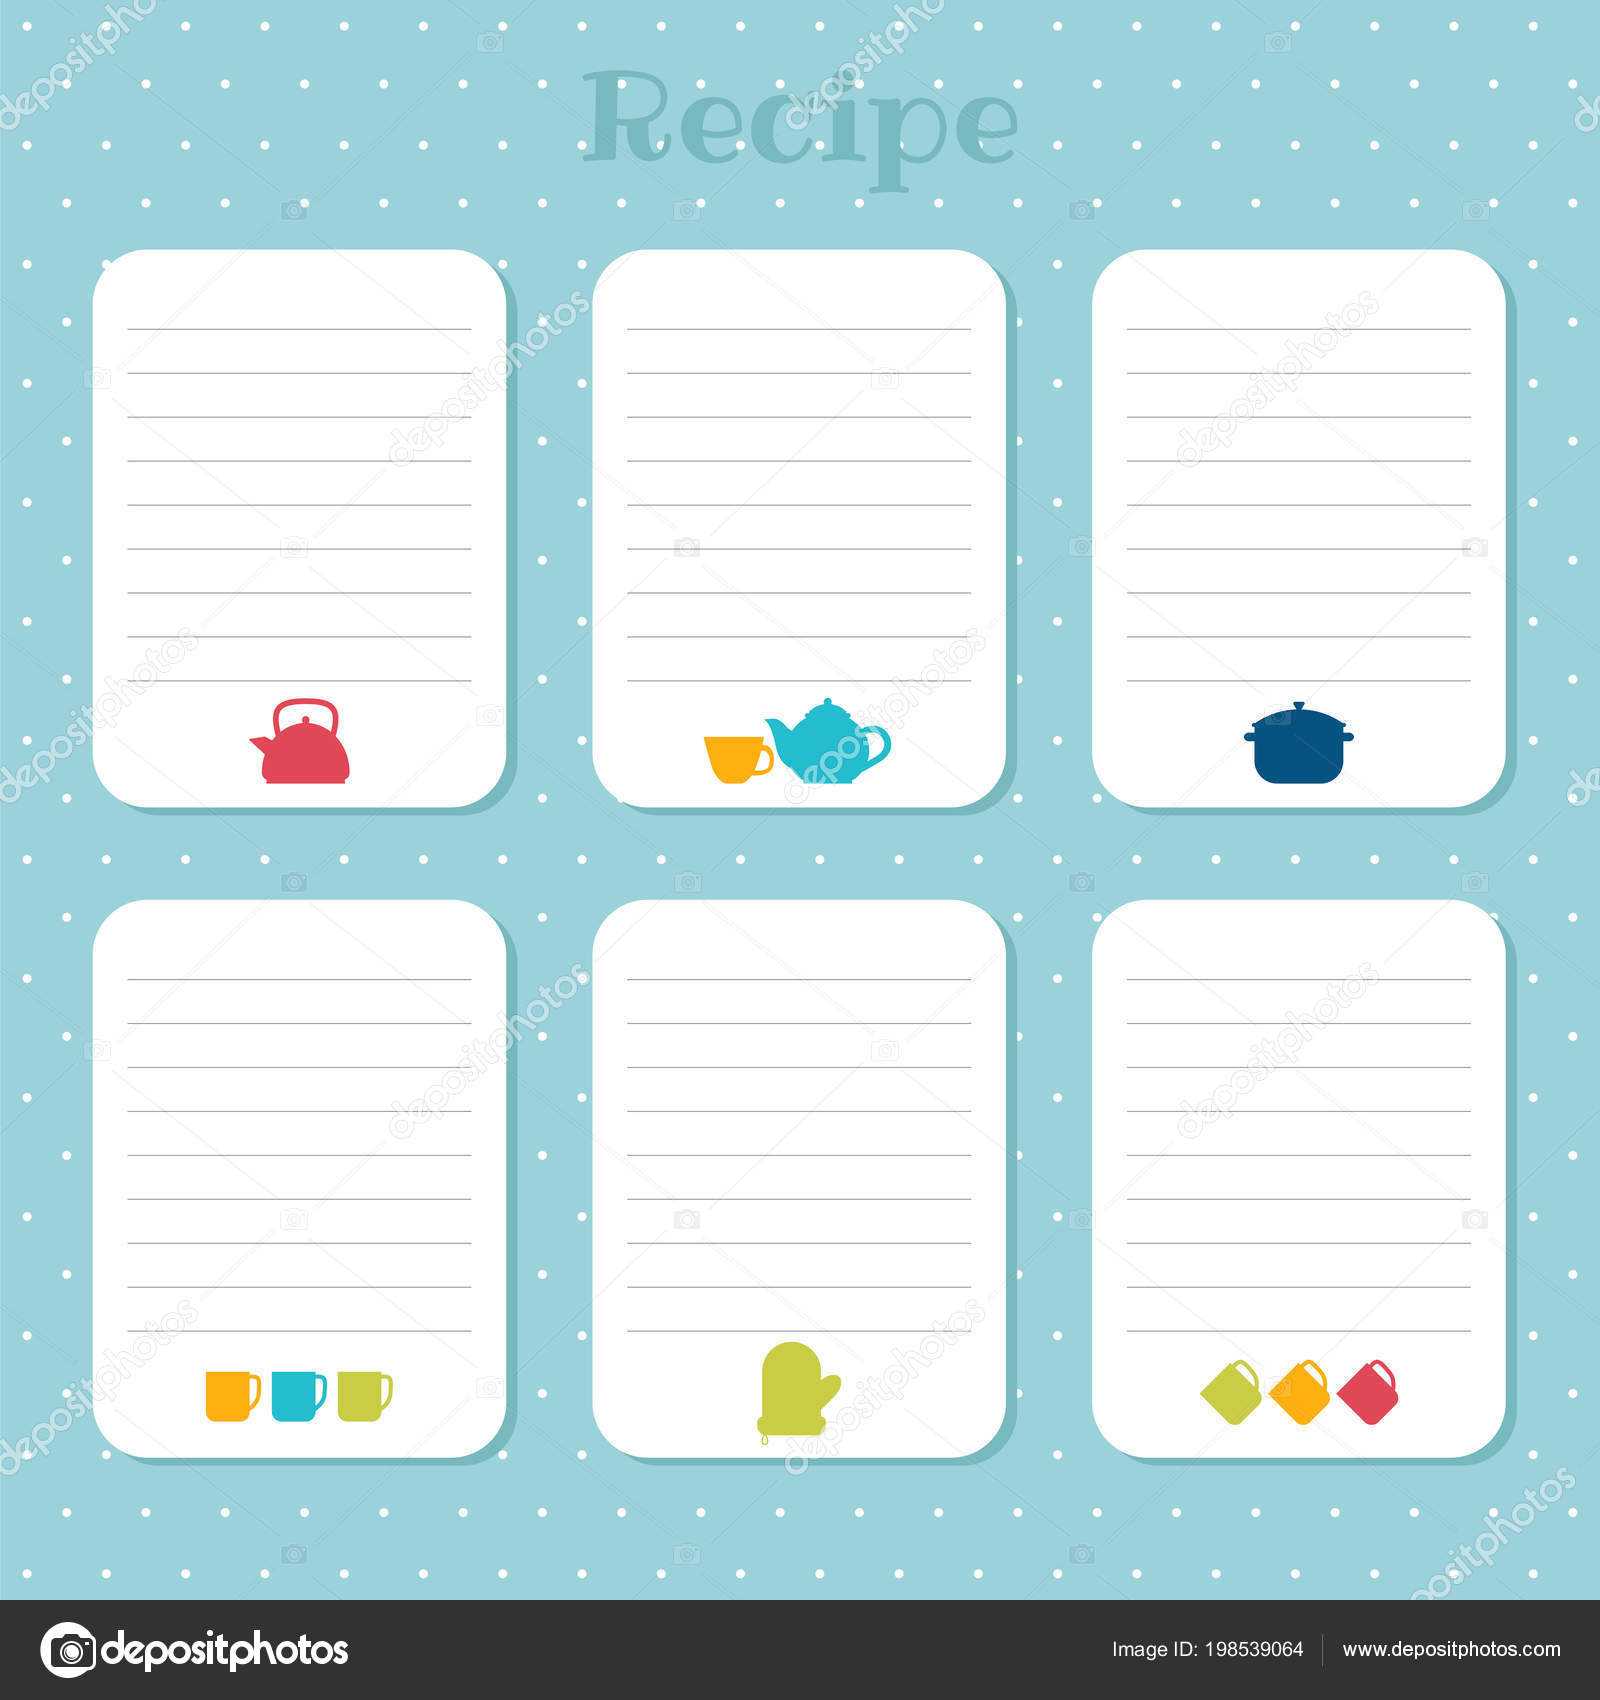 Recipe Card Templates | Recipe Cards Set Cooking Card In Restaurant Recipe Card Template